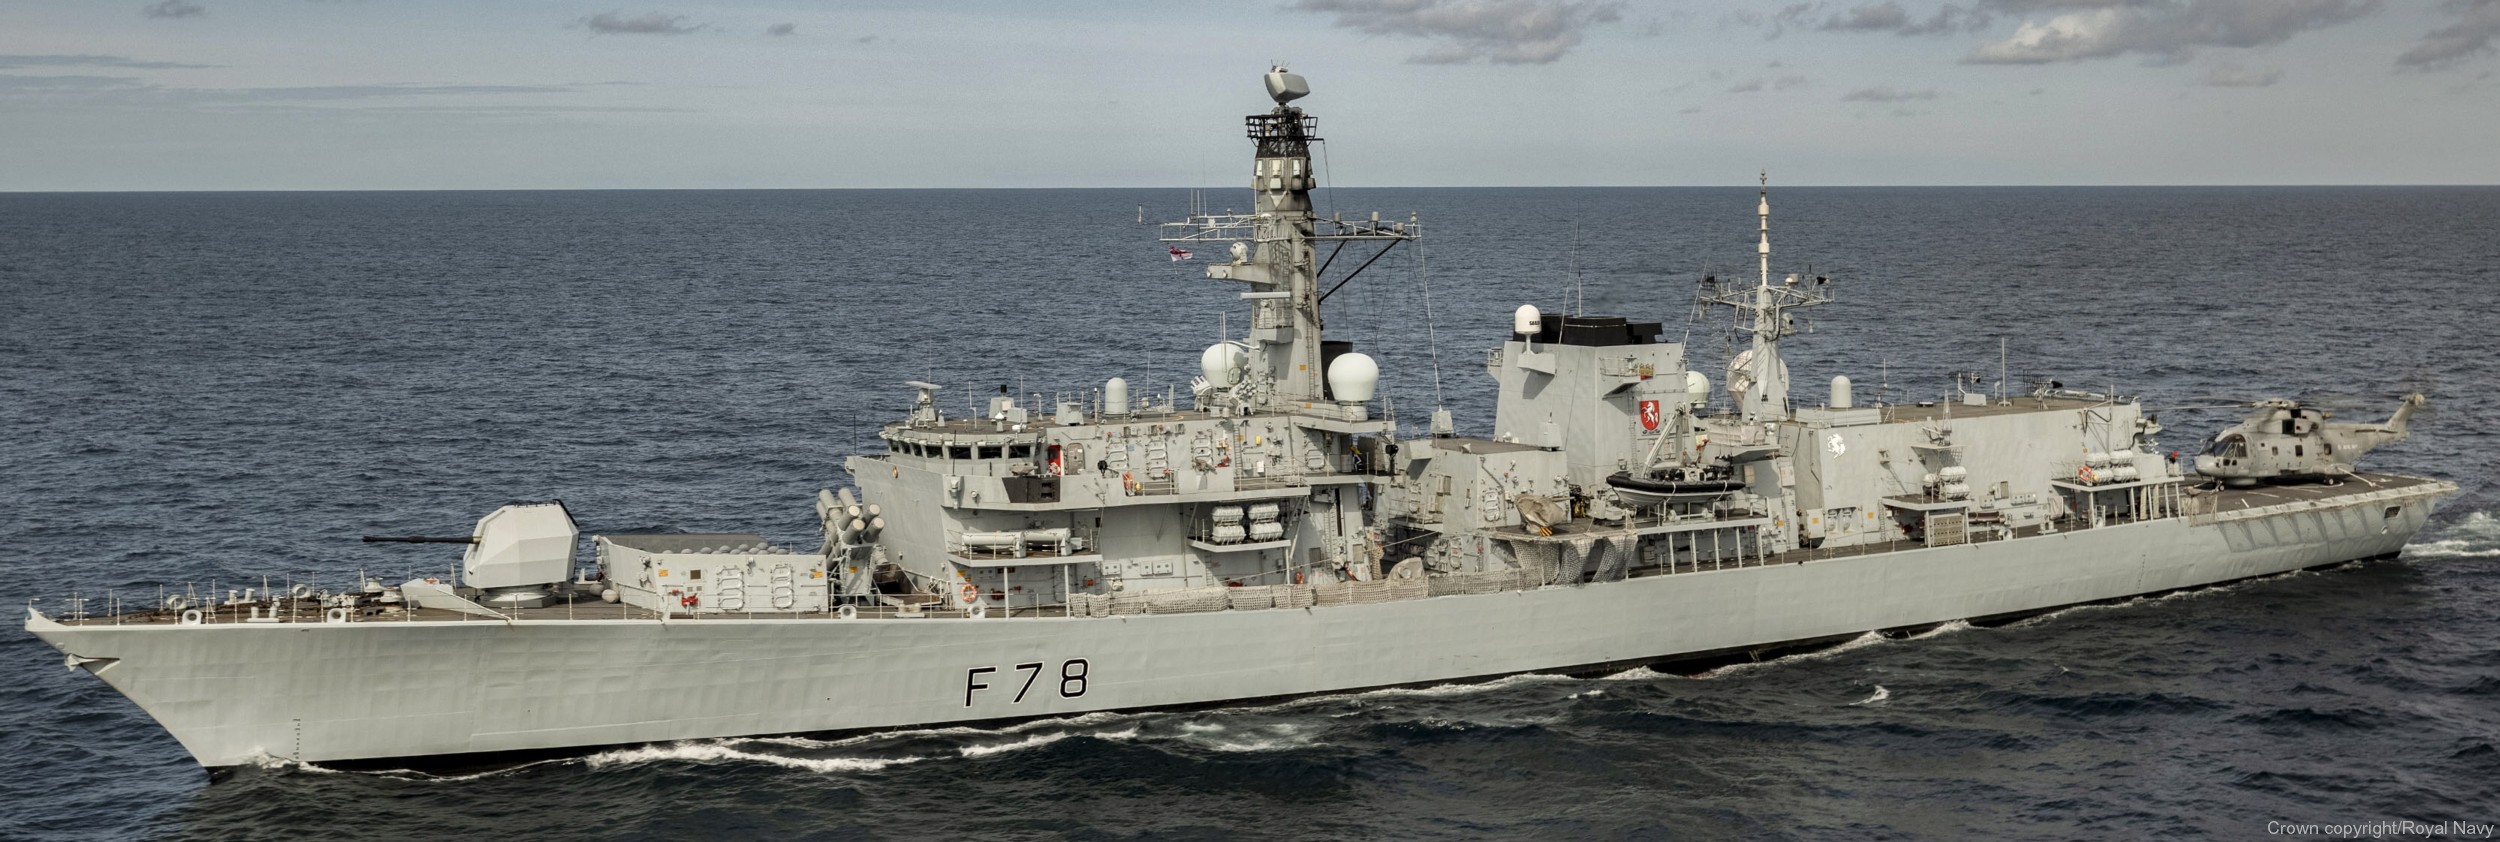 f-78 hms kent type 23 duke class guided missile frigate ffg royal navy 37